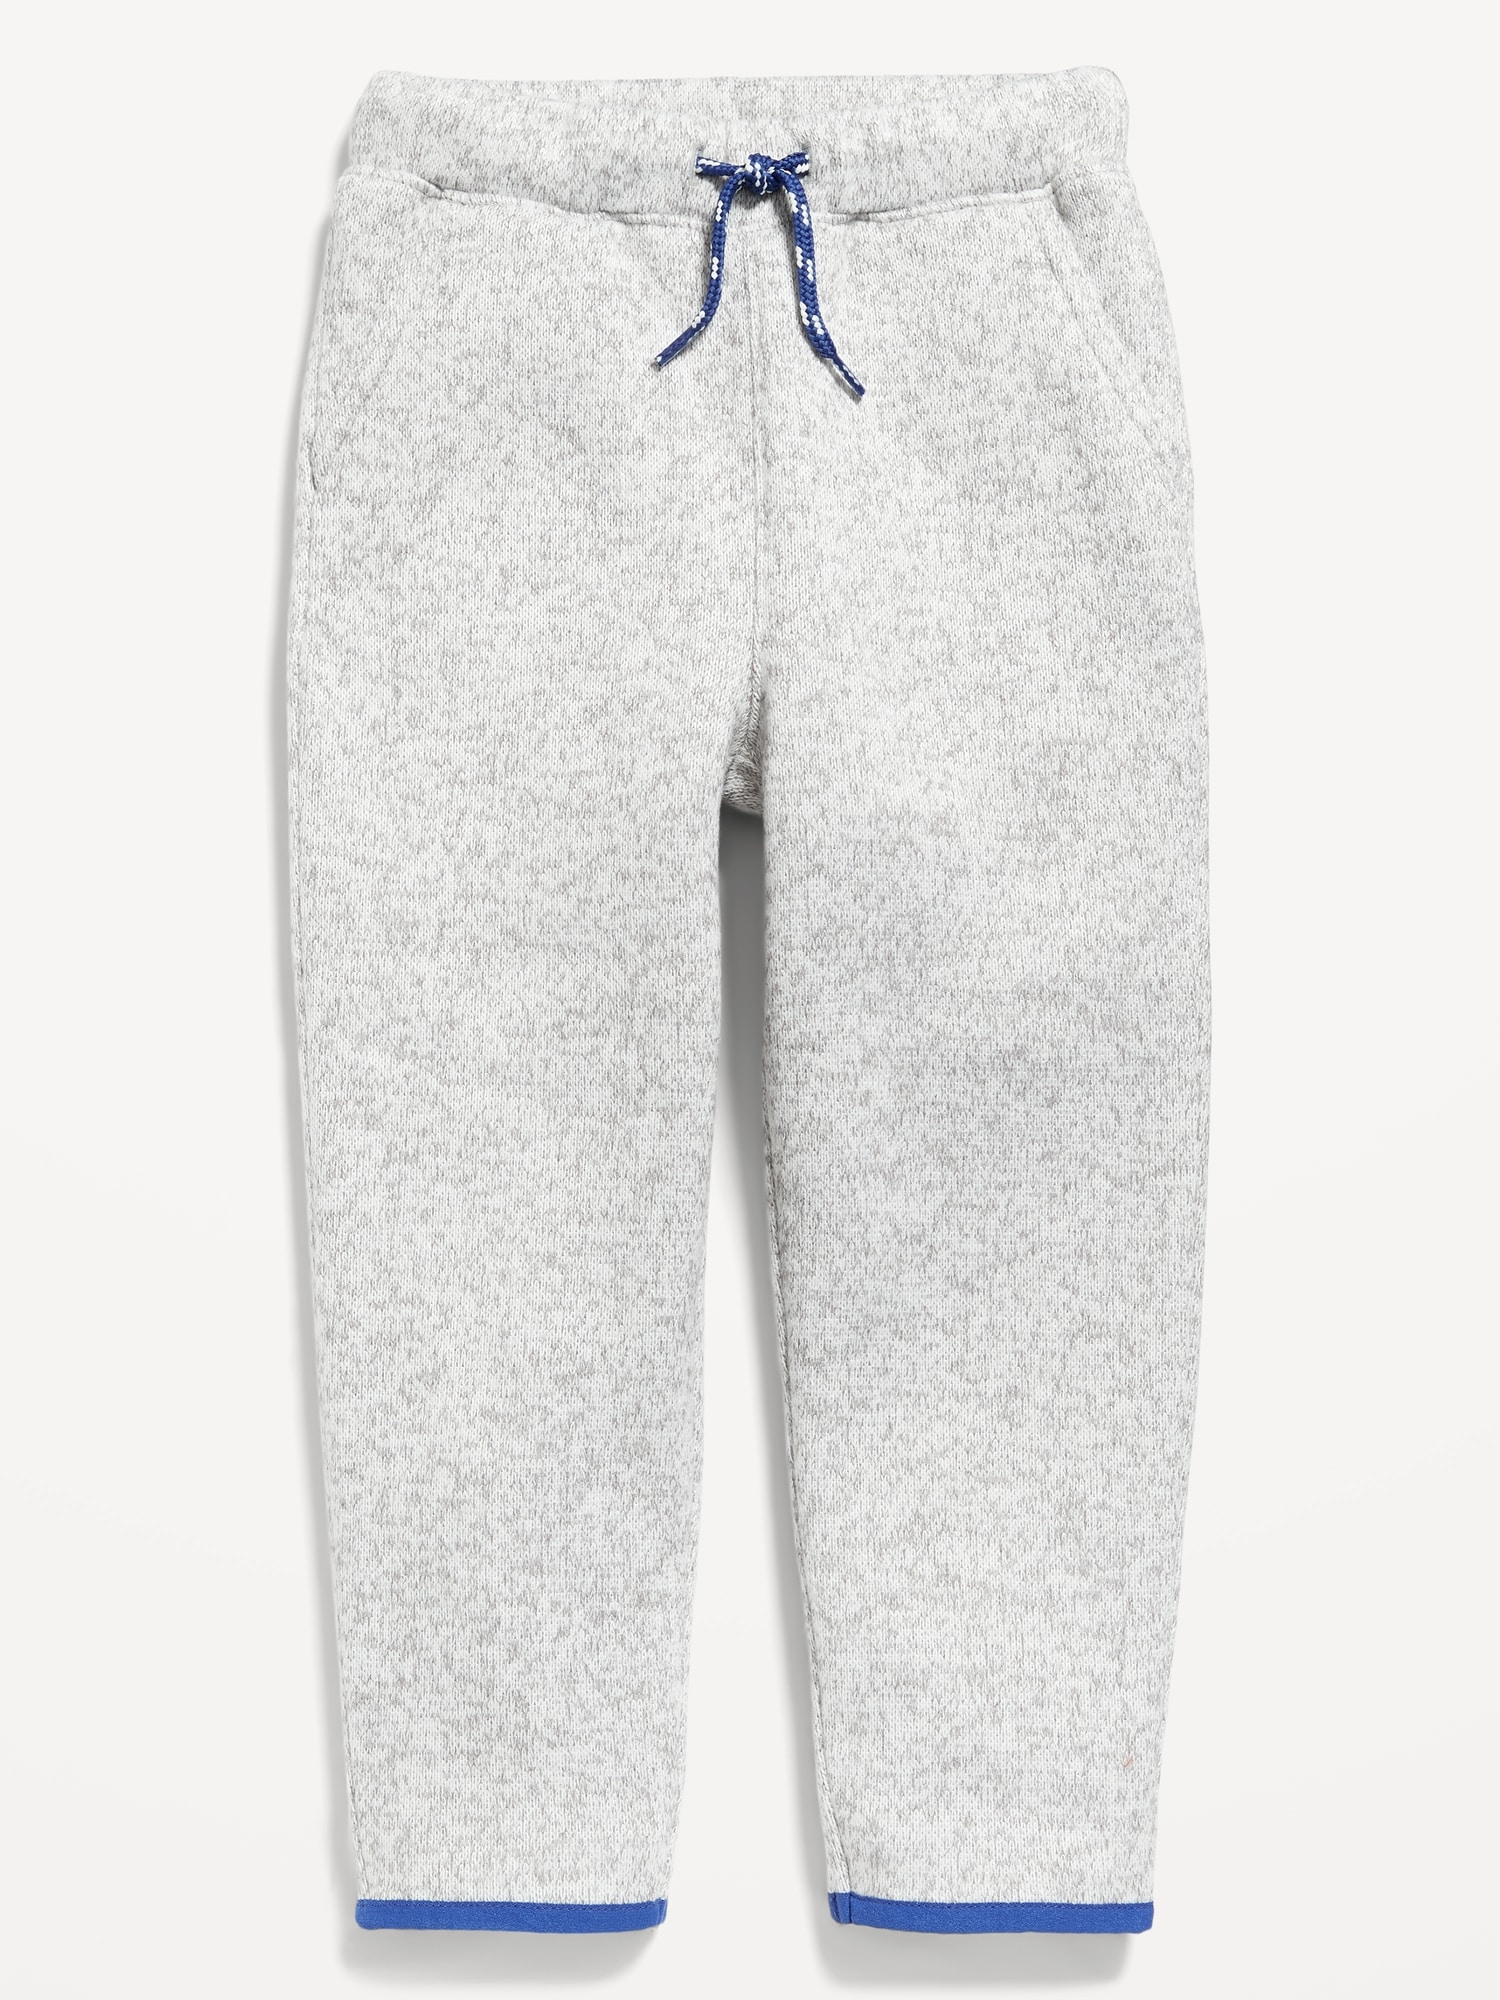 Sweater-Fleece Jogger Pants for Toddler Boys